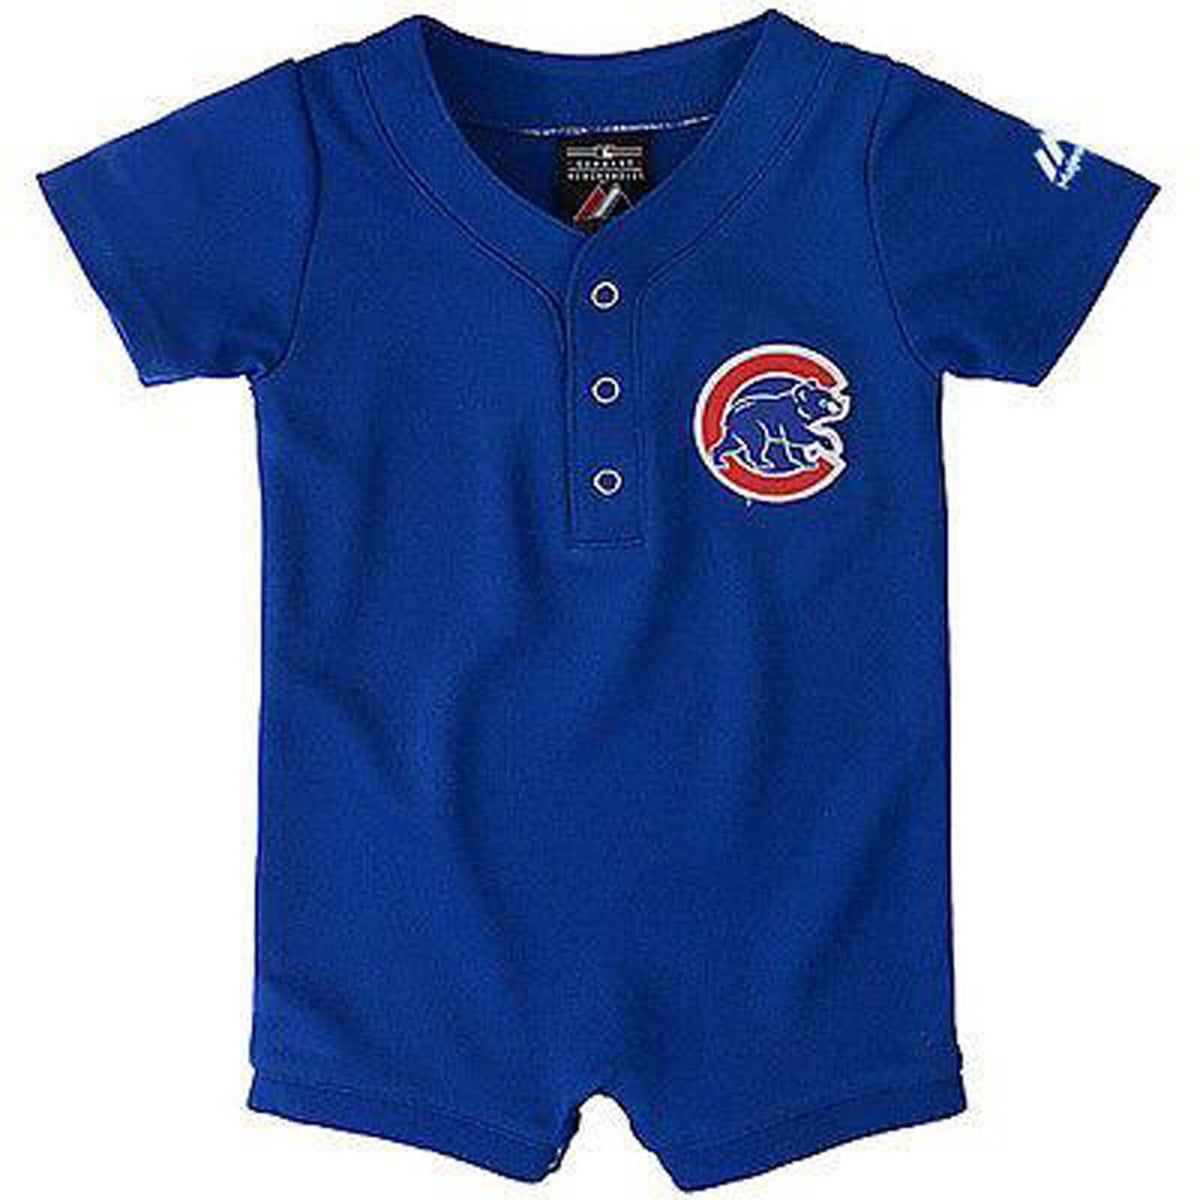 Chicago Cubs Toddler Cooperstown Rewind Arch T-Shirt